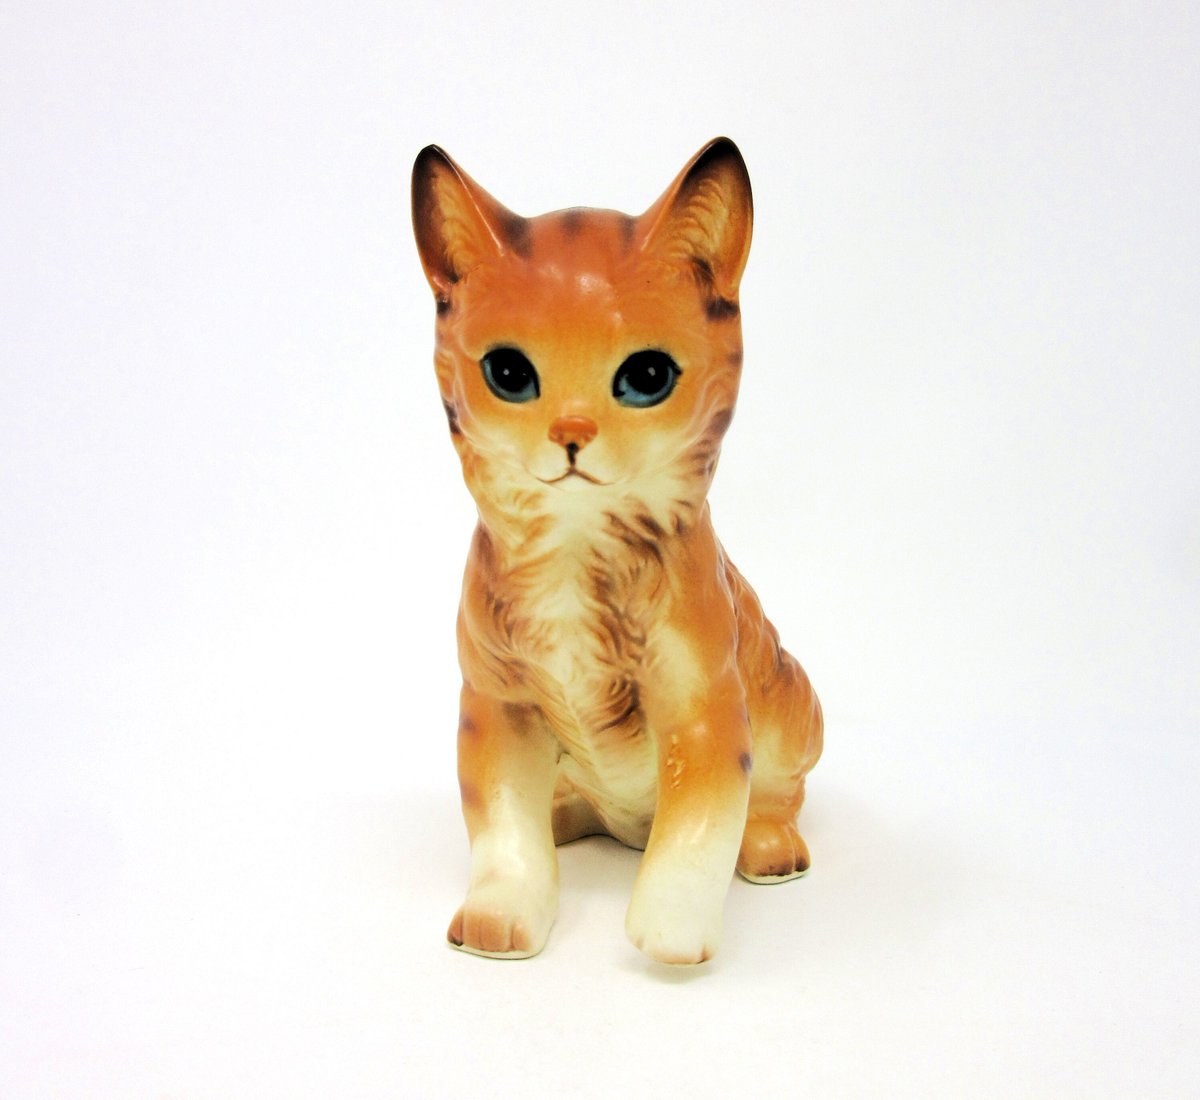 Vintage Porcelain Lefton Cat Figurine, Orange Tabby with Blue Eyes and Tiger Stripes, Lifelike House Pet, Cats Kitten Gift Idea, Home Decor tuppu.net/19fa57f2 #vintage #Etsy #etsyseller #PorcelainFigurine